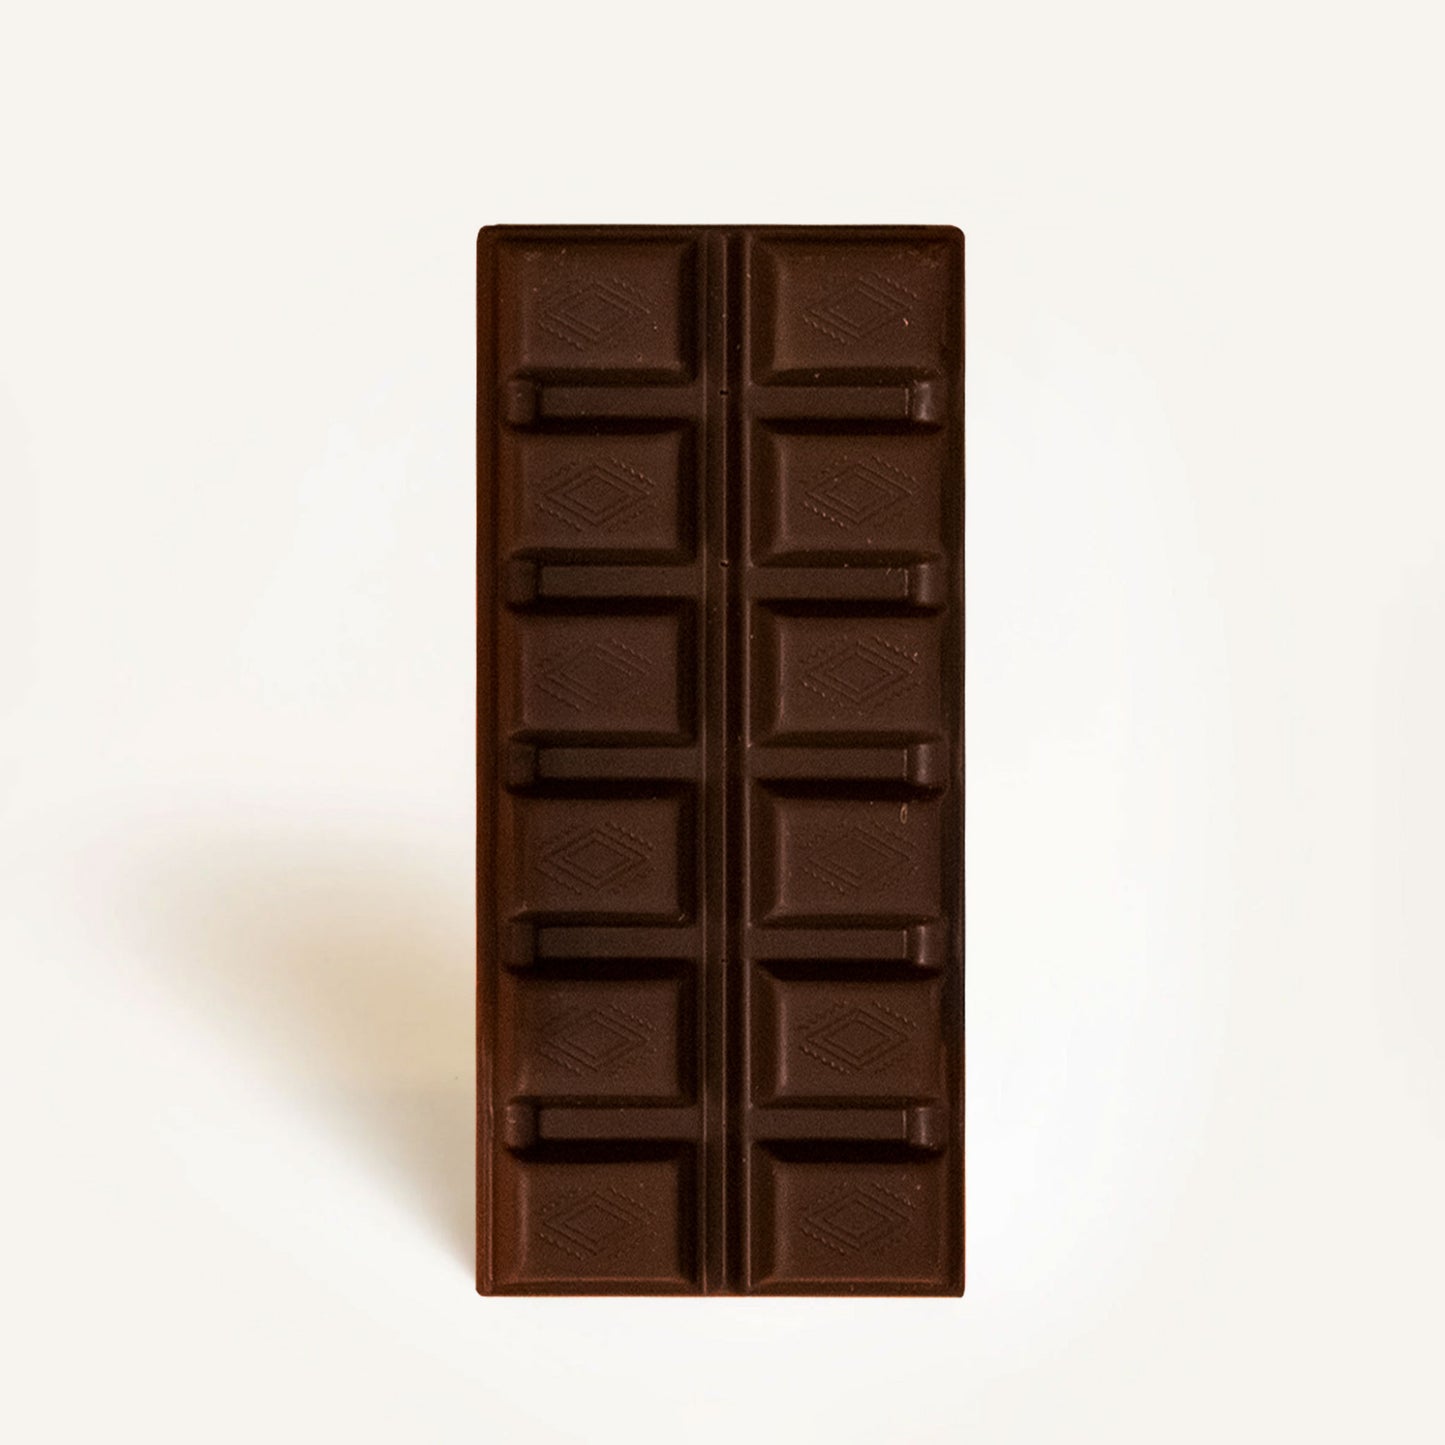 Barre "Gran Cacao" 64%.